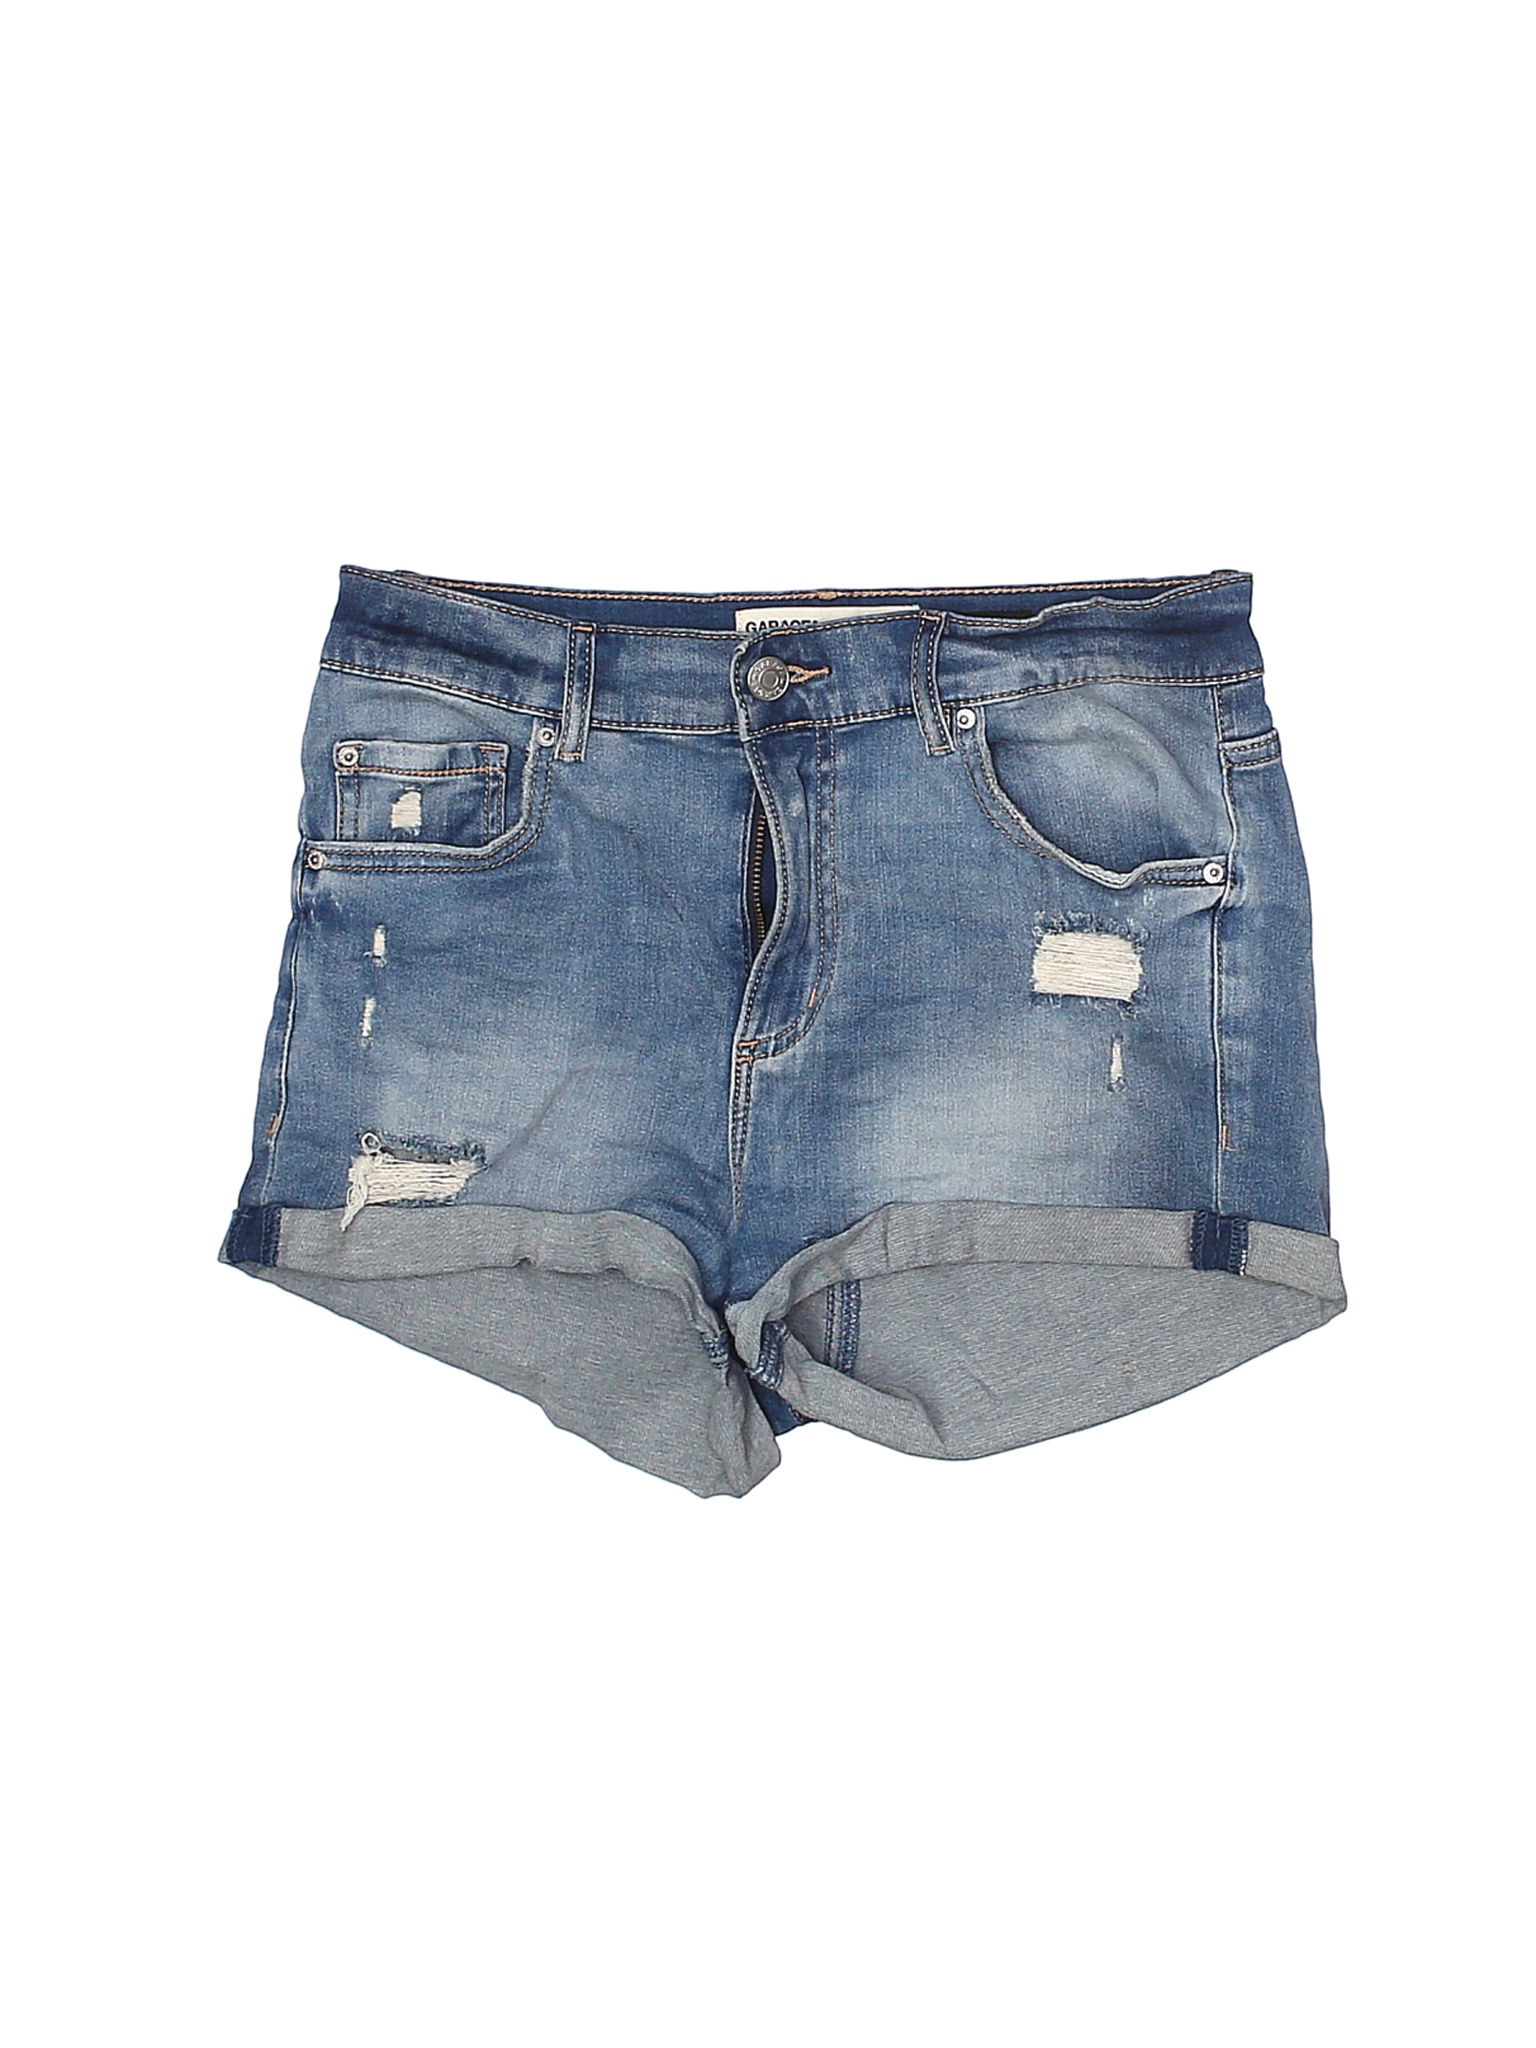 Garage Women Blue Denim Shorts 5 | eBay